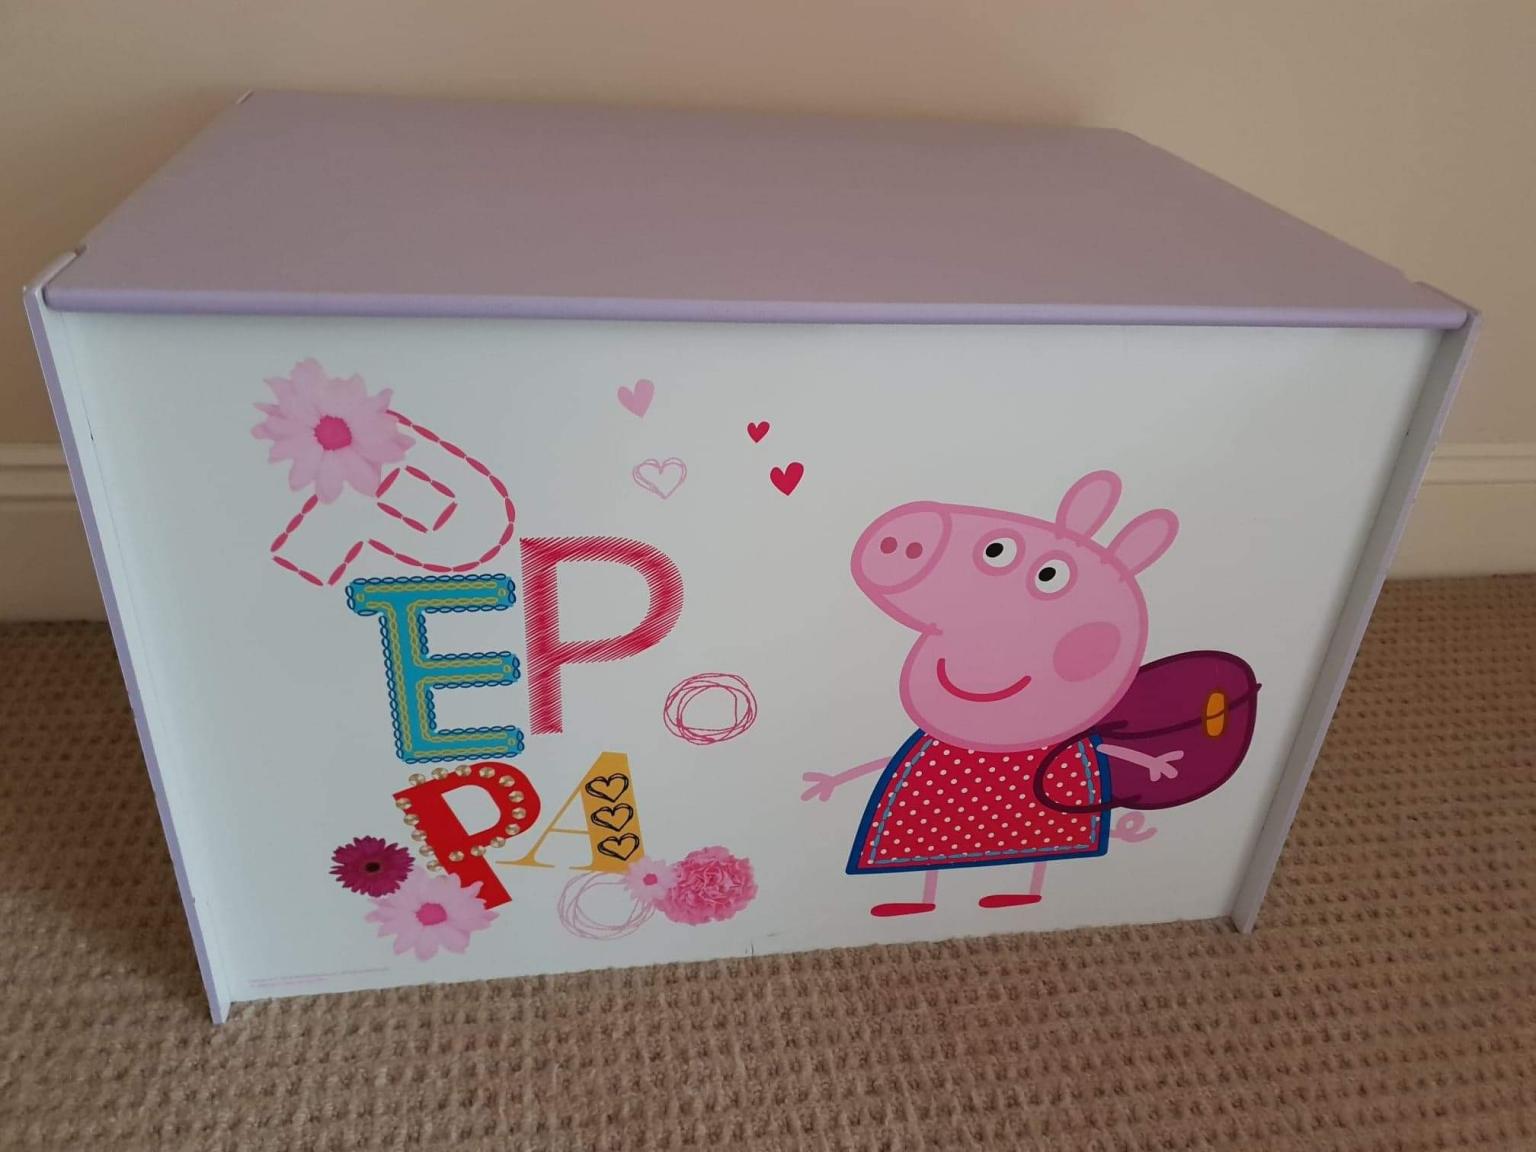 peppa pig toy storage